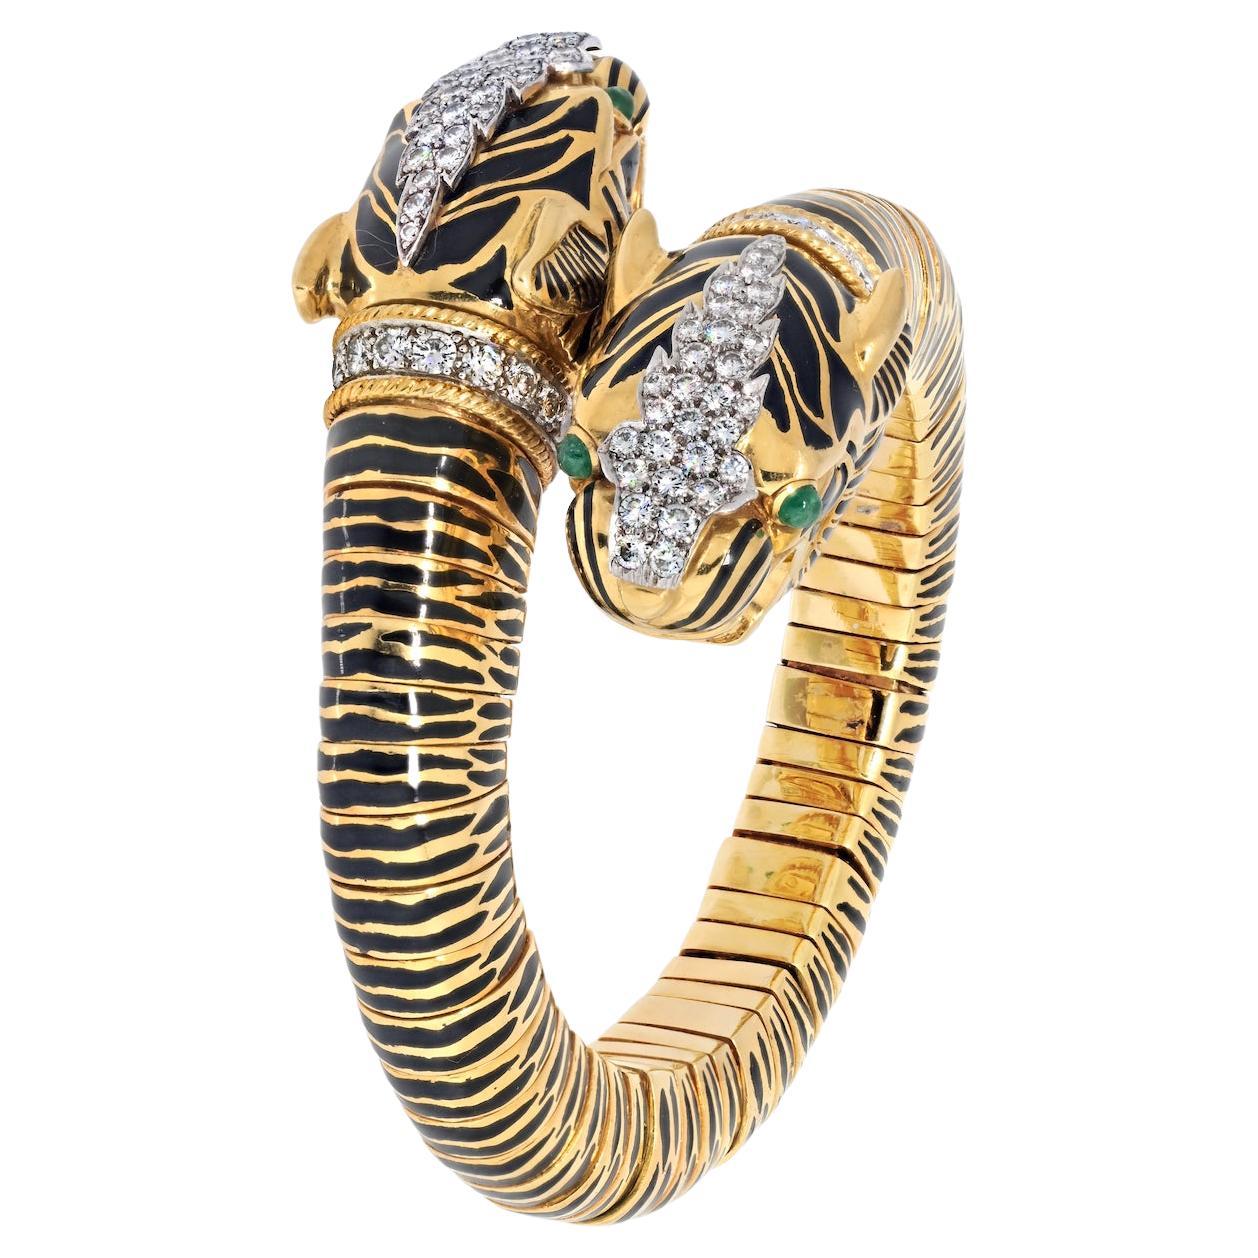 David Webb - Bracelet en or jaune 18 carats, platine, double tigre, animal en émail noir